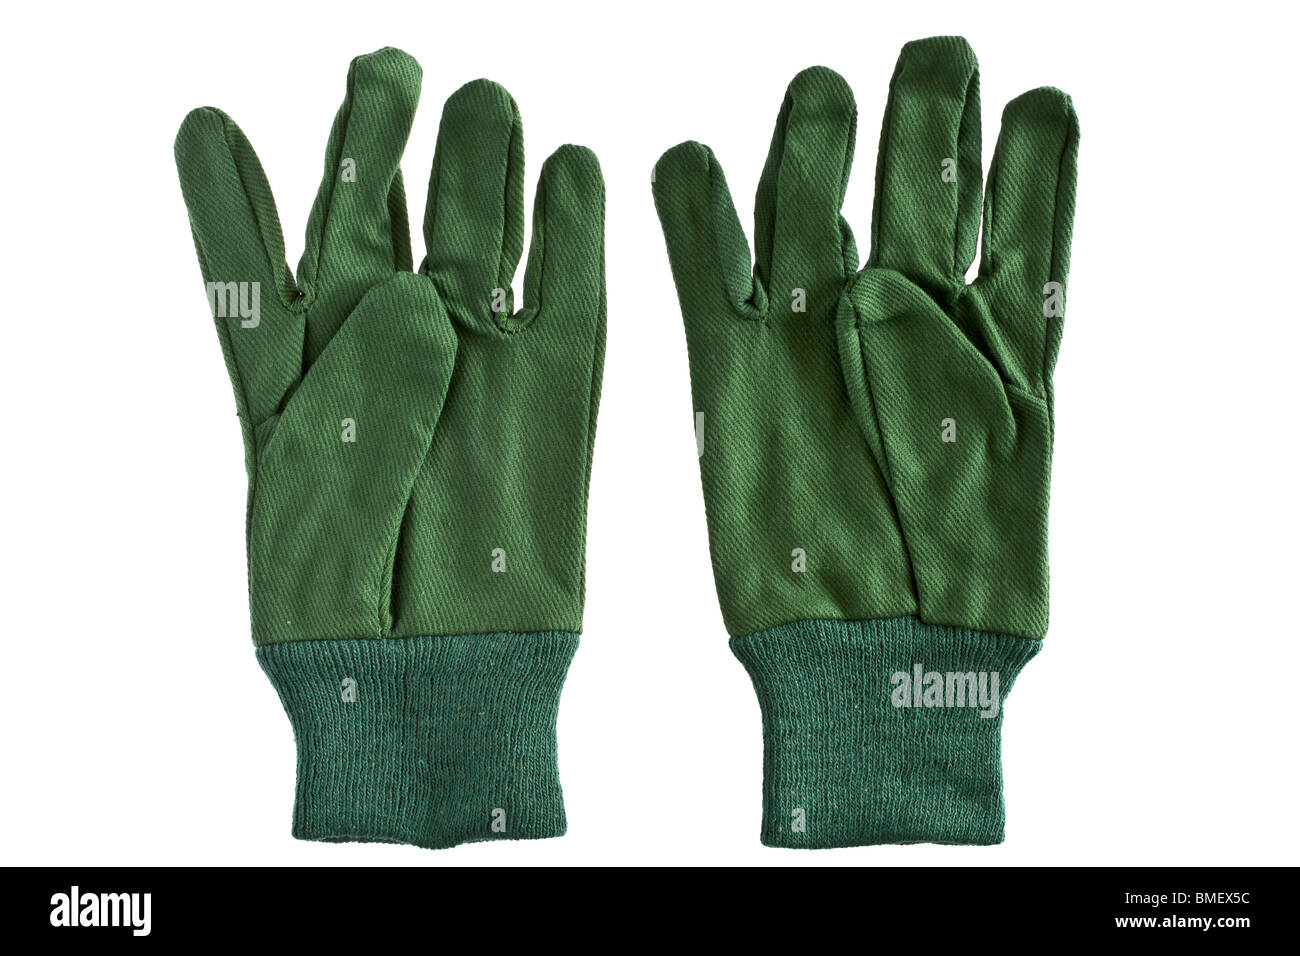 3 Pairs of Gardening Gloves for Ladies Women green 